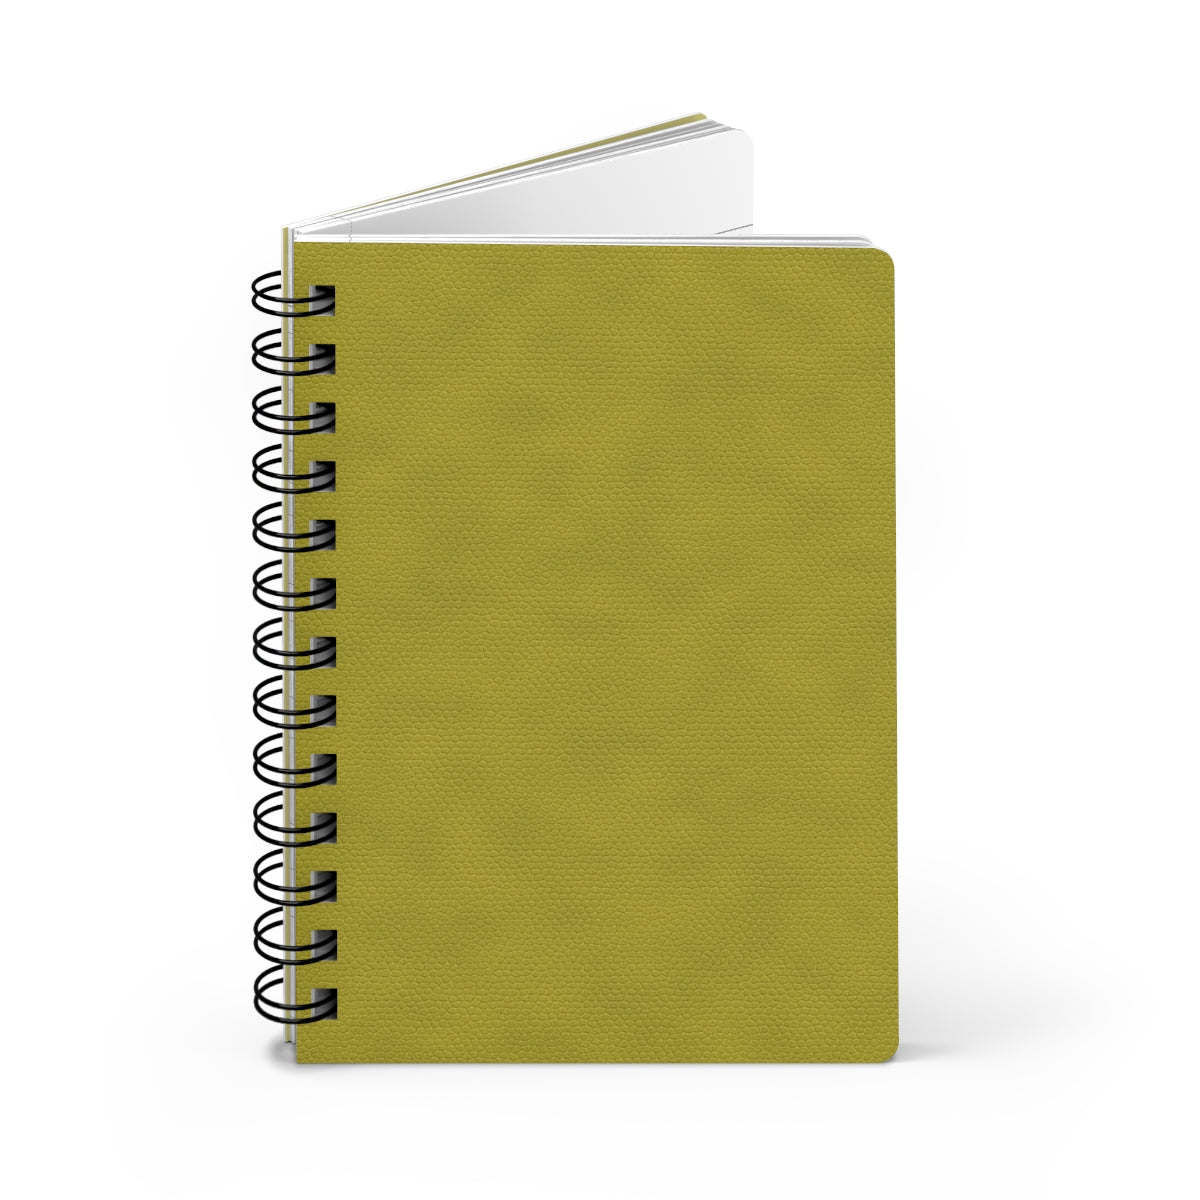 Yellow Leather Print Spiral Bound Journal